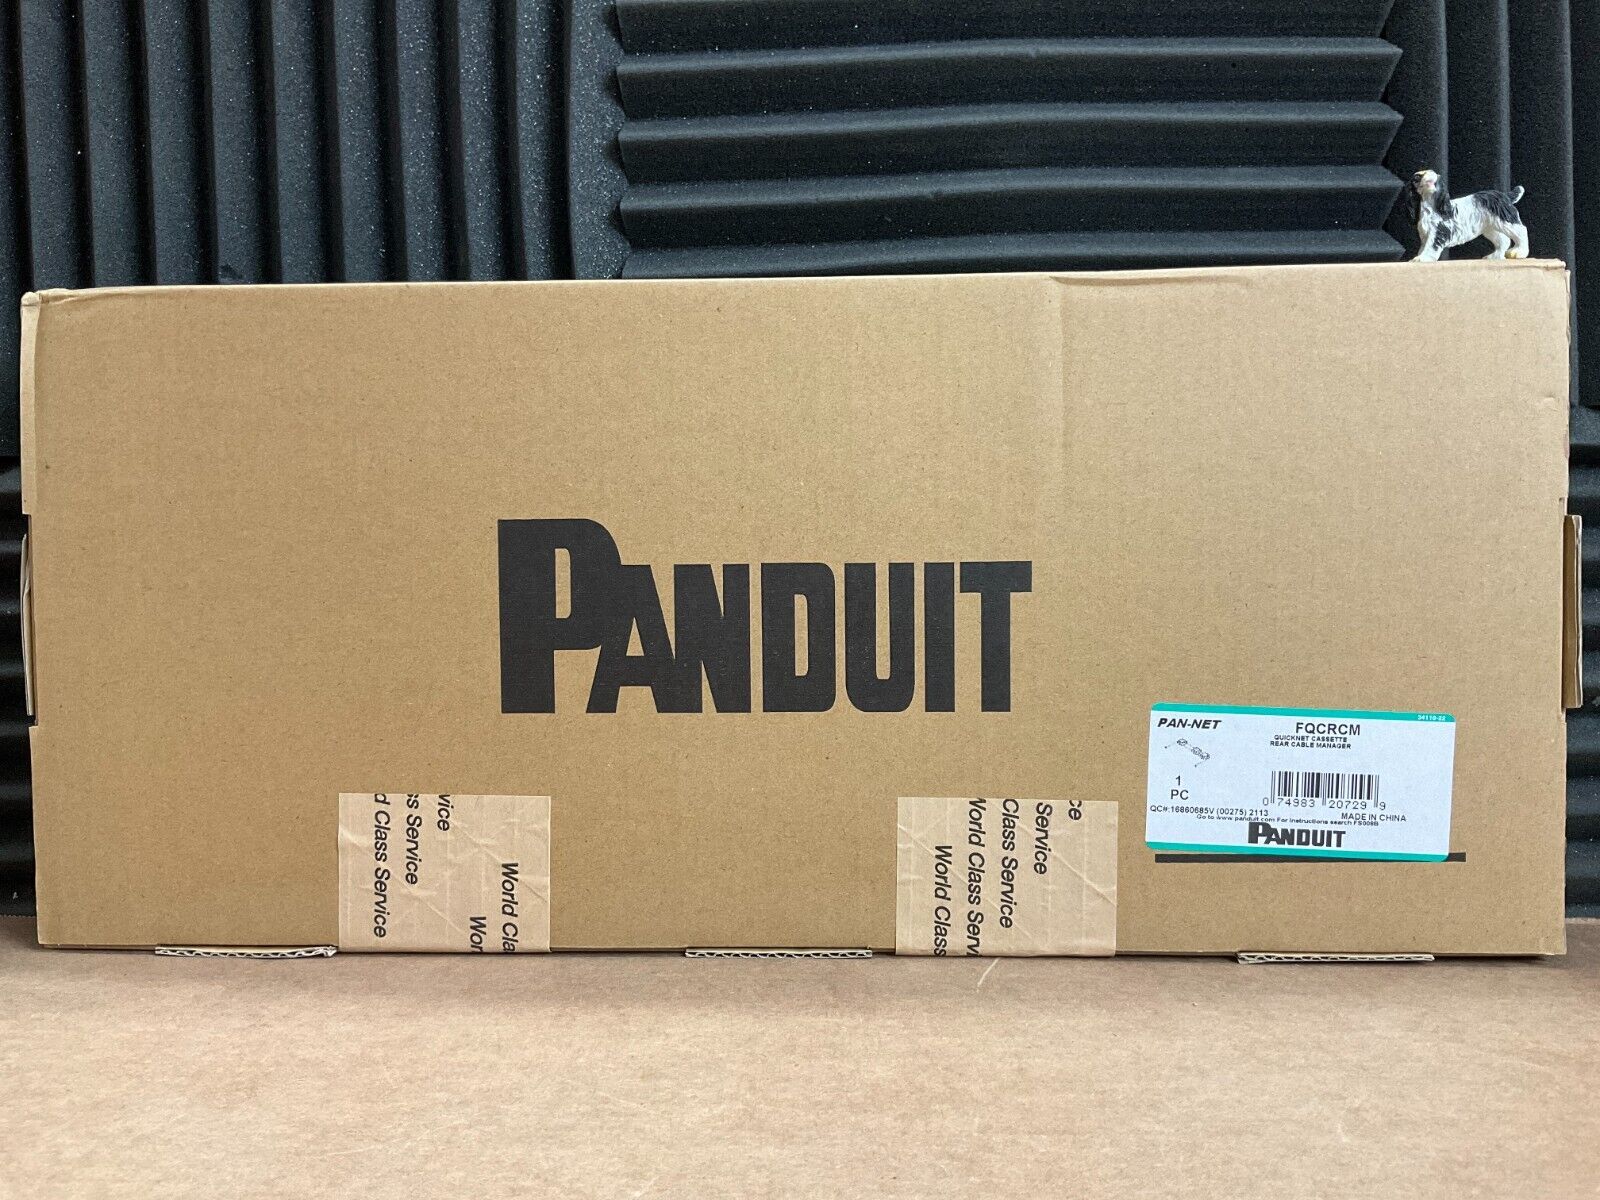 Panduit QuickNet Cassette Rear Cable Manager FQCRCM ✅❤️️✅❤️️ Brand New SEALED